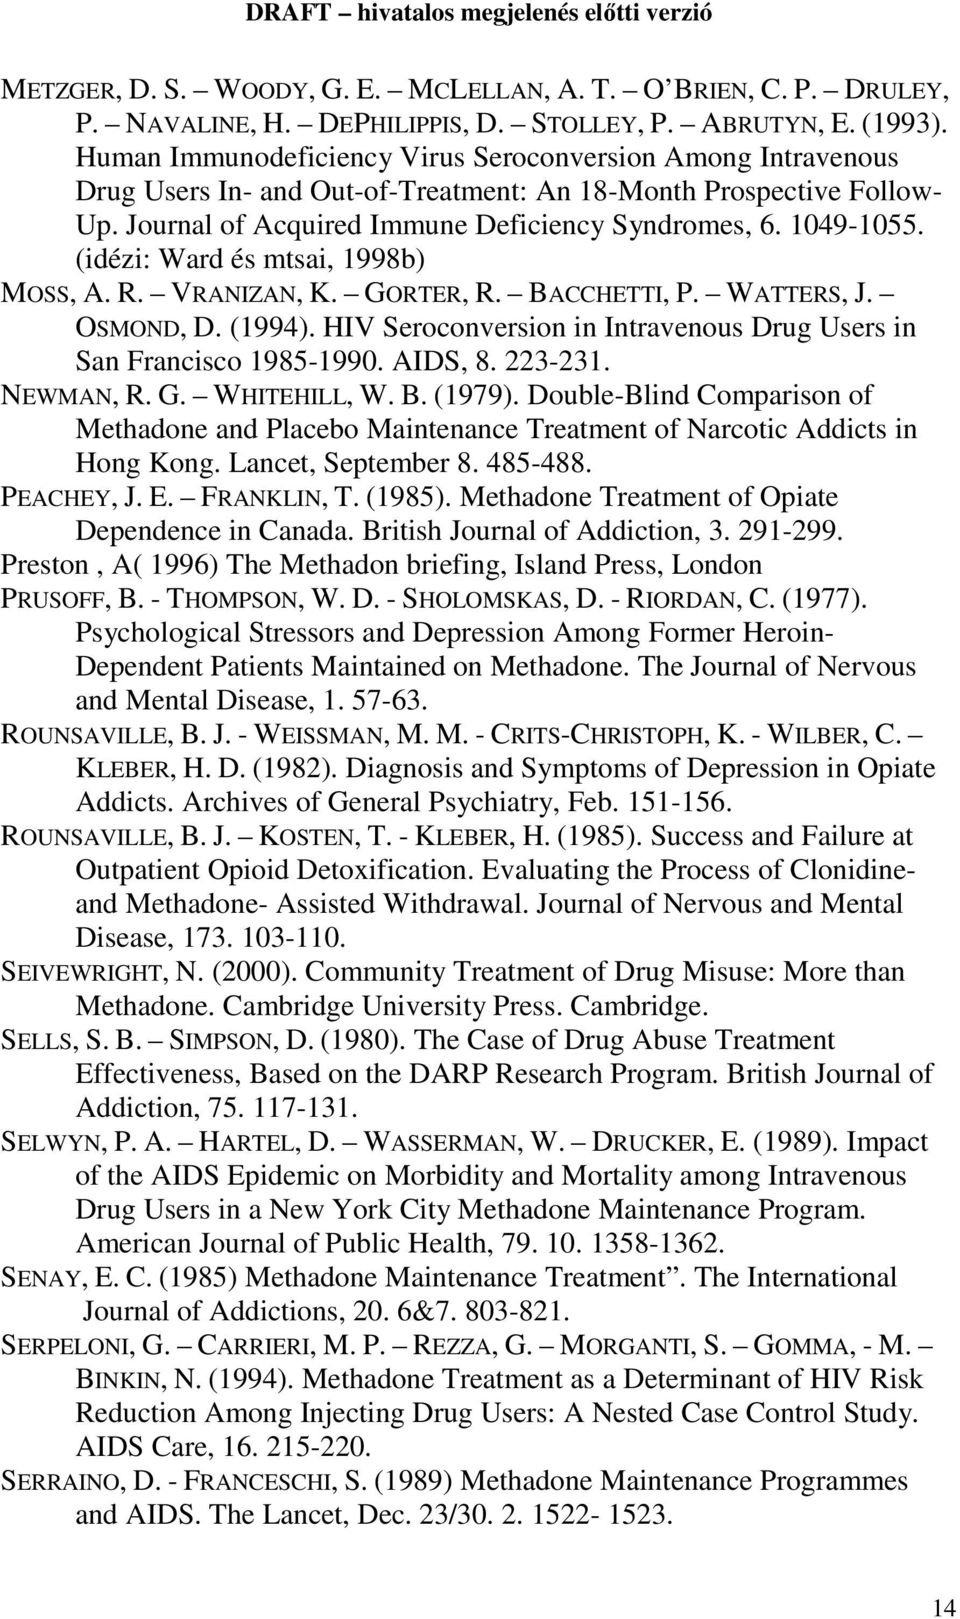 (idézi: Ward és mtsai, 1998b) MOSS, A. R. VRANIZAN, K. GORTER, R. BACCHETTI, P. WATTERS, J. OSMOND, D. (1994). HIV Seroconversion in Intravenous Drug Users in San Francisco 1985-1990. AIDS, 8.